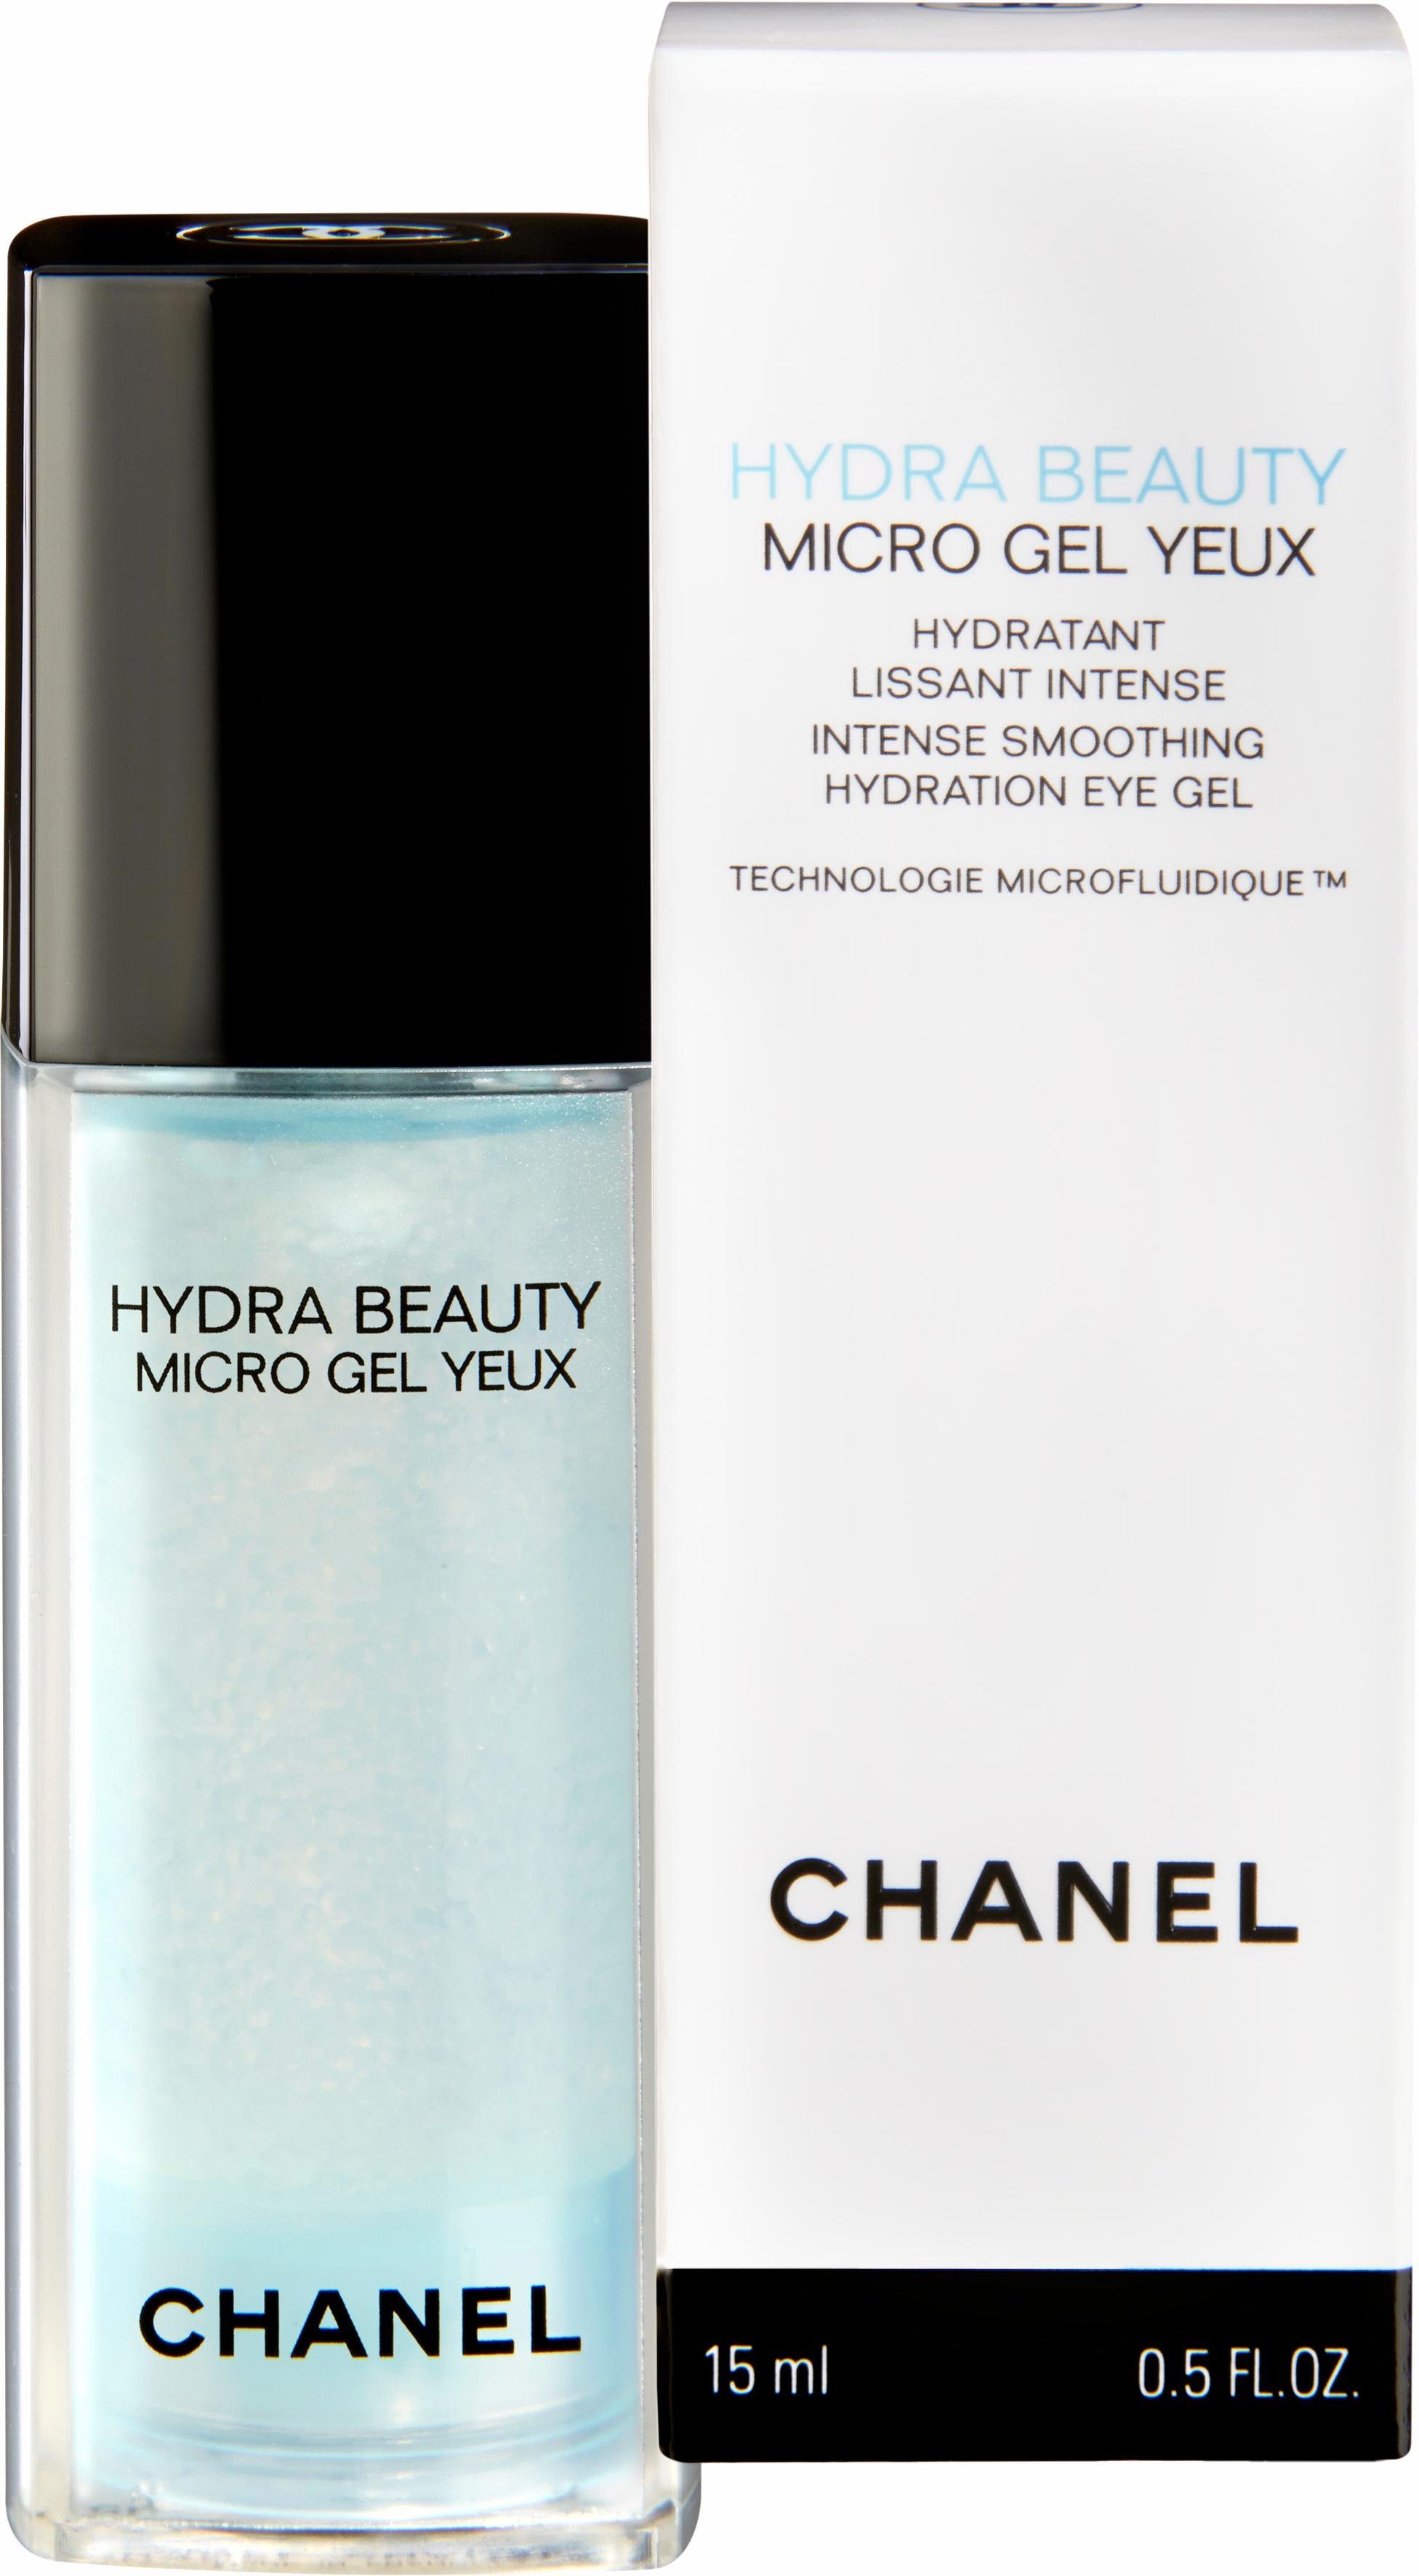 CHANEL Hydra Beauty Micro Gel Yeux Intense Smoothing Hydration Eye